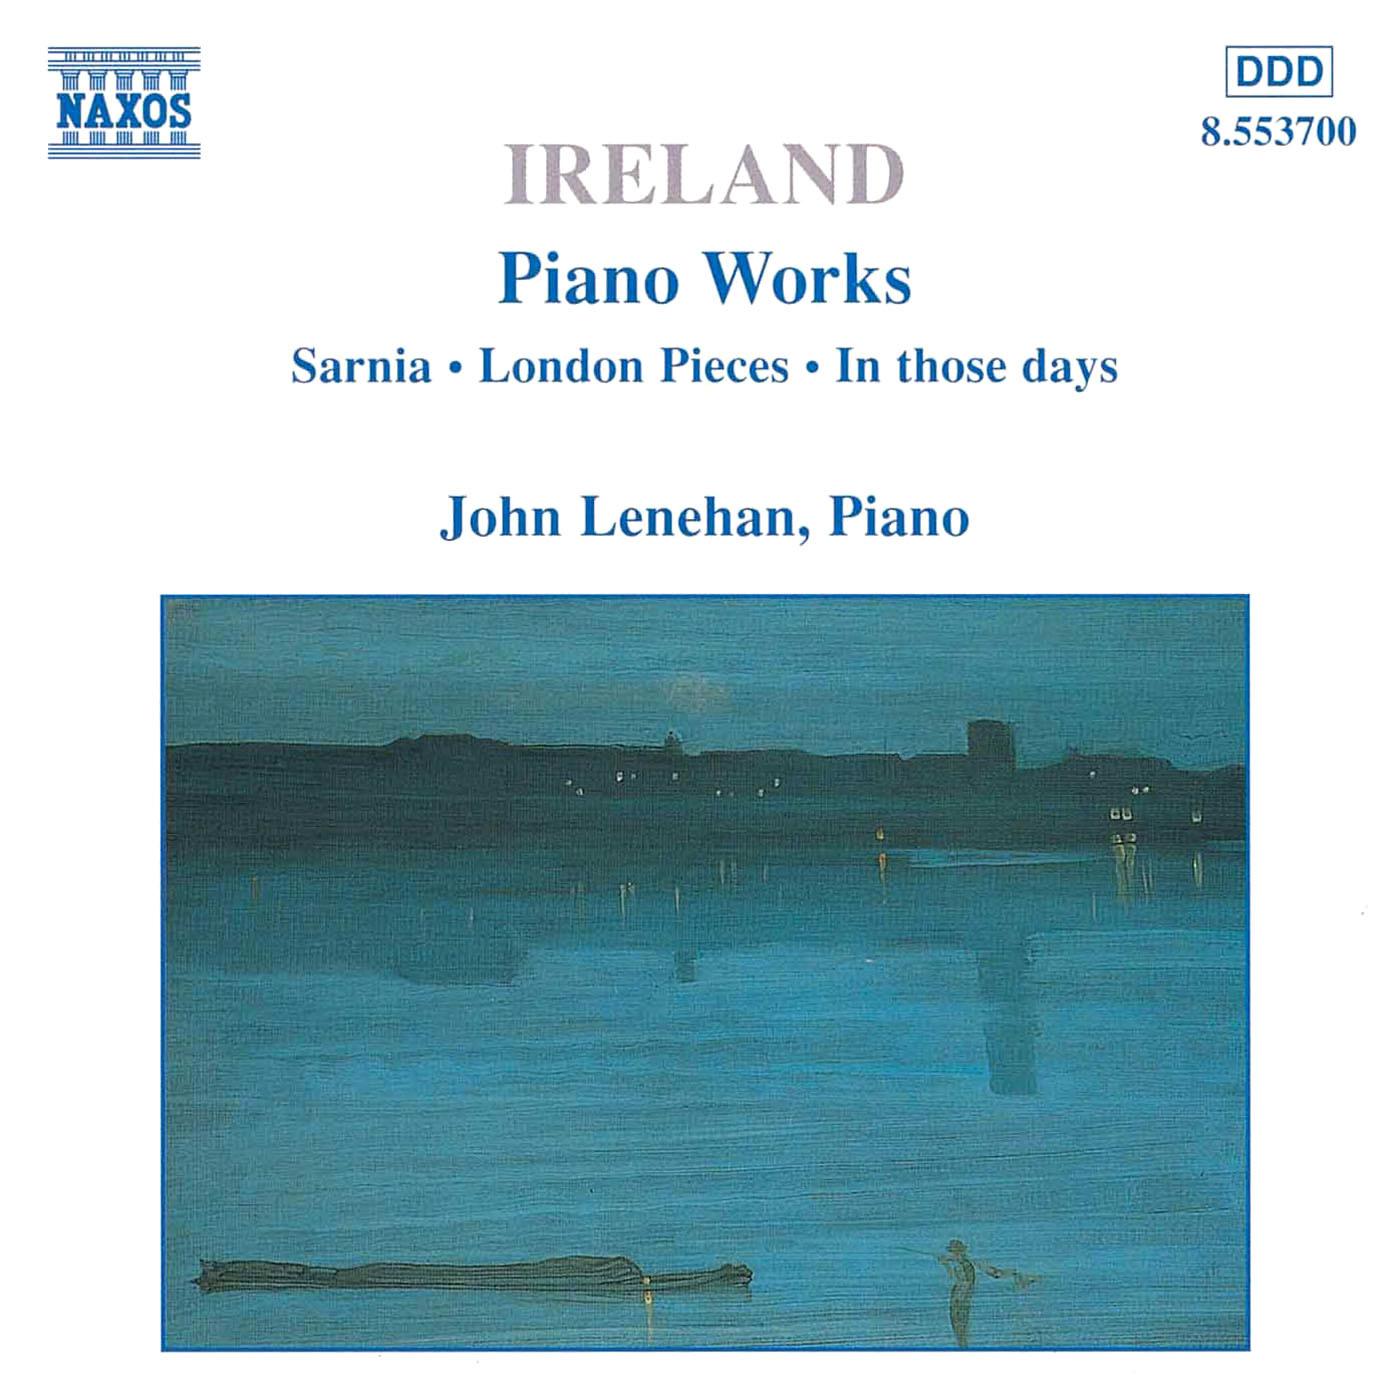 IRELAND, J.: Piano Works, Vol.  1 (Lenehan) - Sarnia / London Pieces / In those days